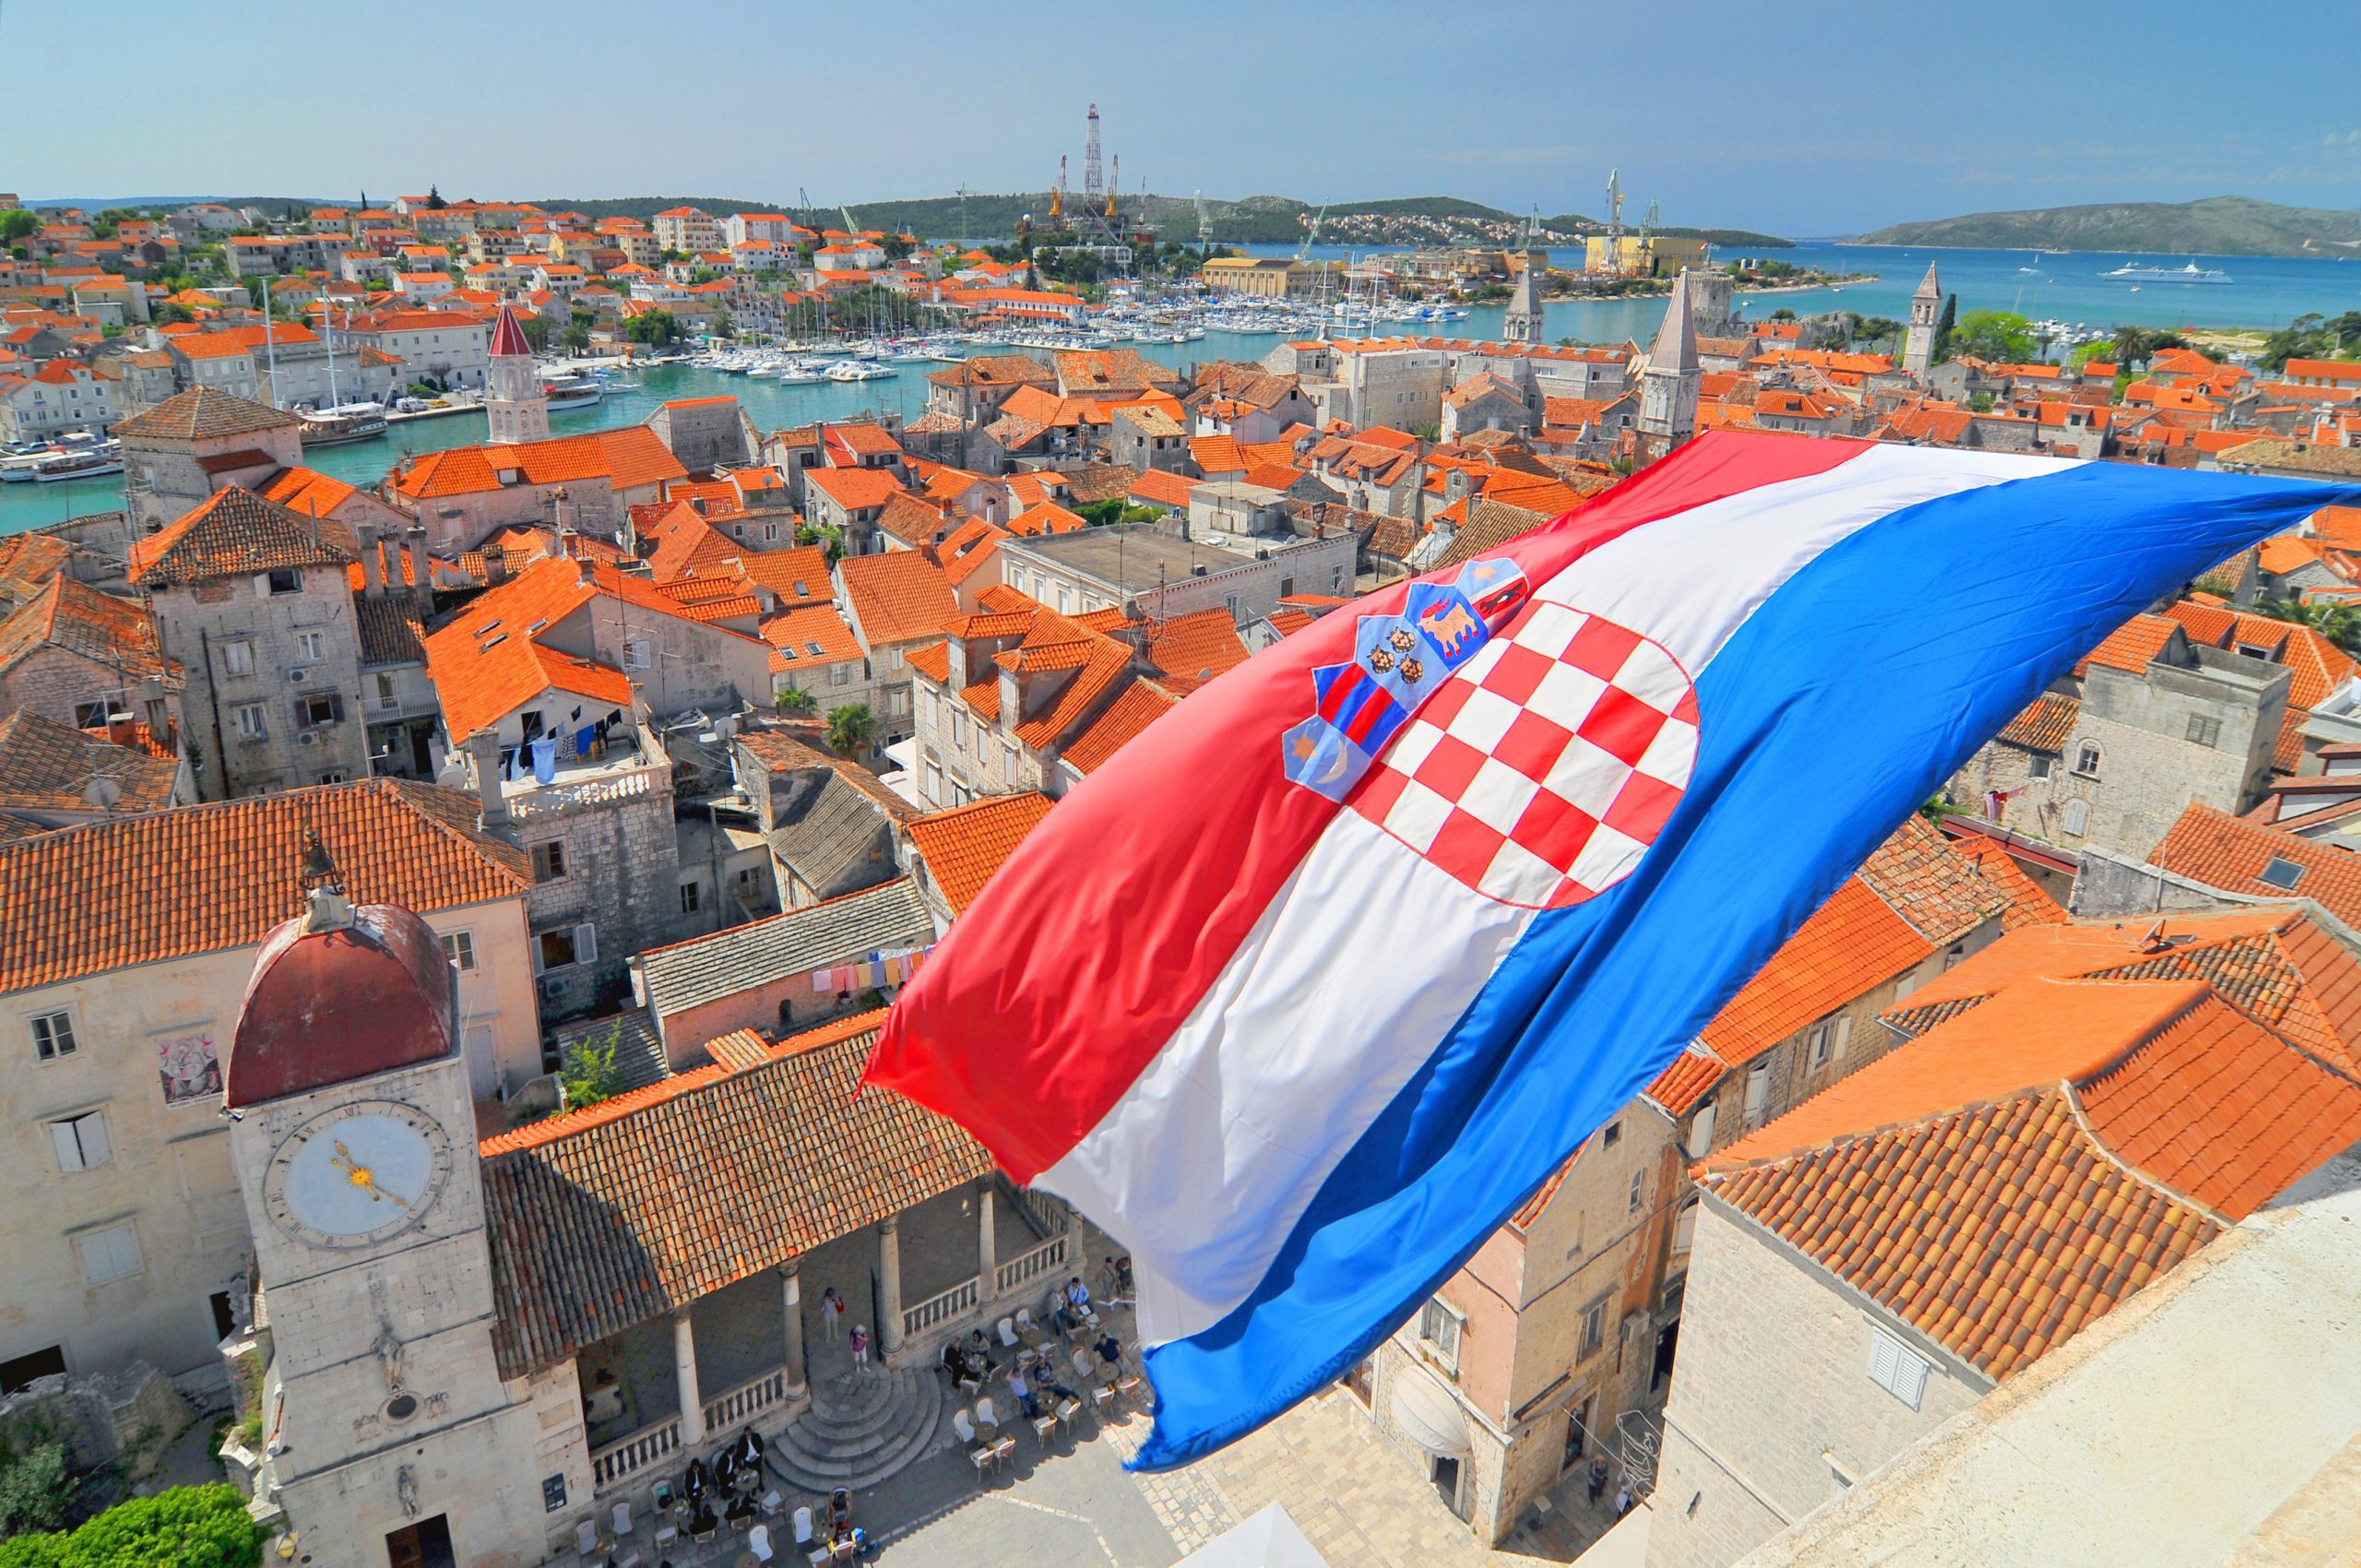 croatian translation services